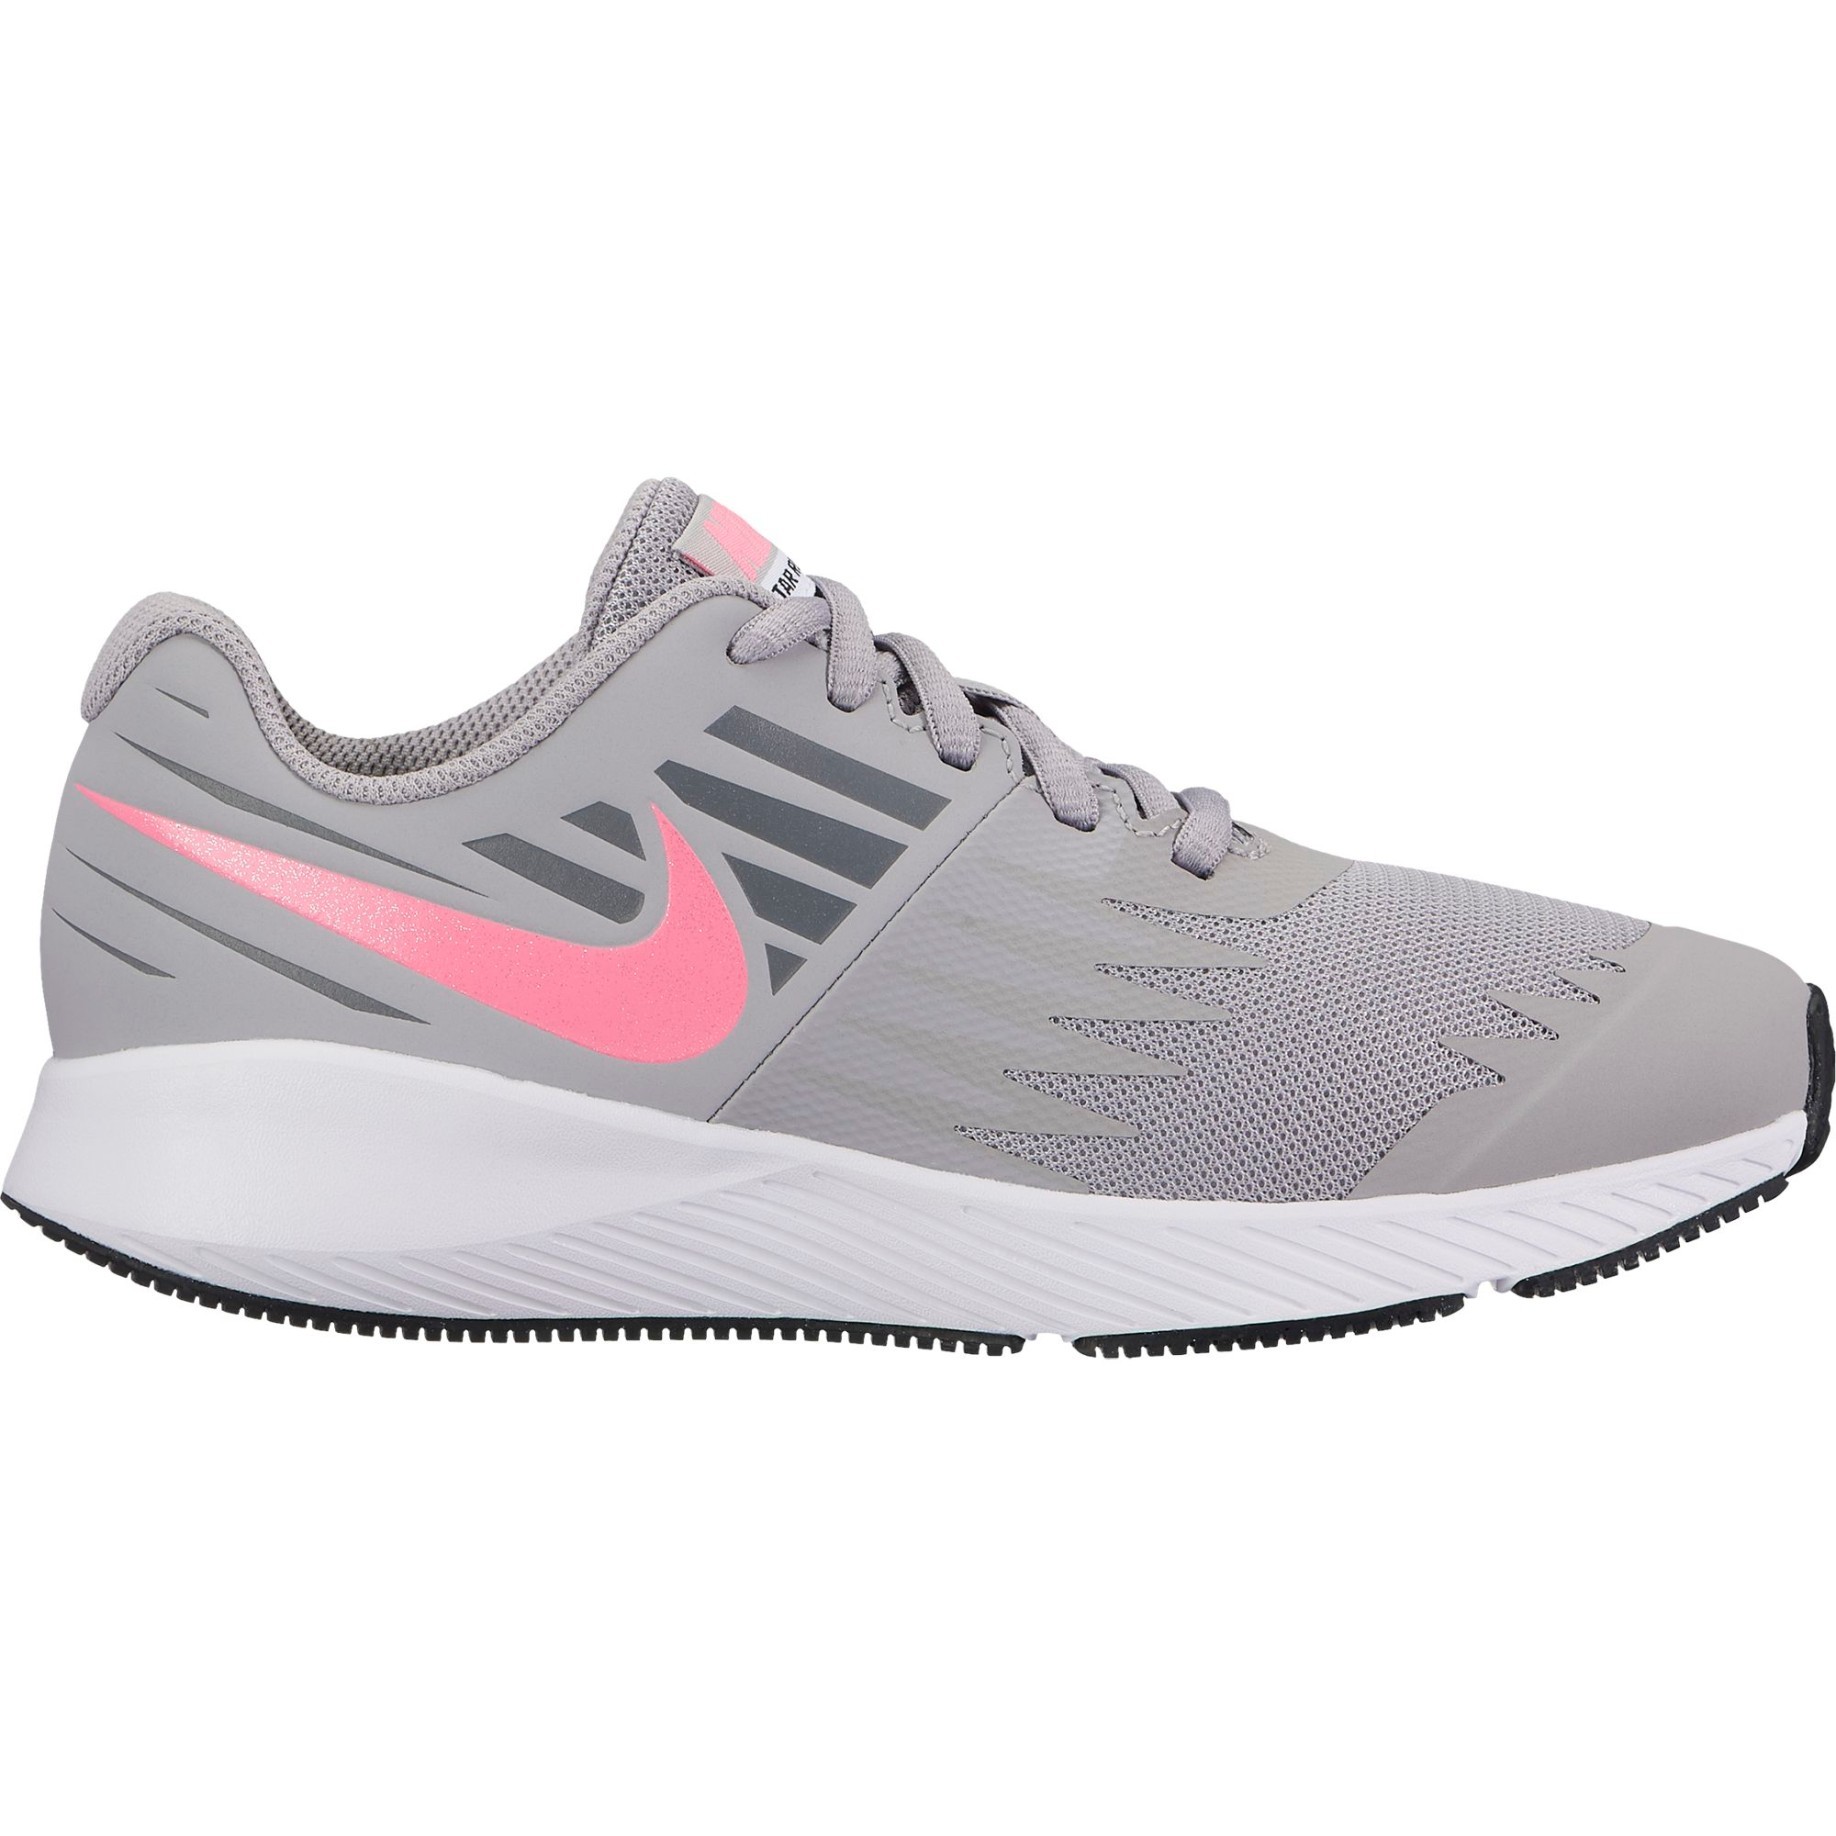 Zapatos Runner GS colore gris Rosa - Nike SportIT.com